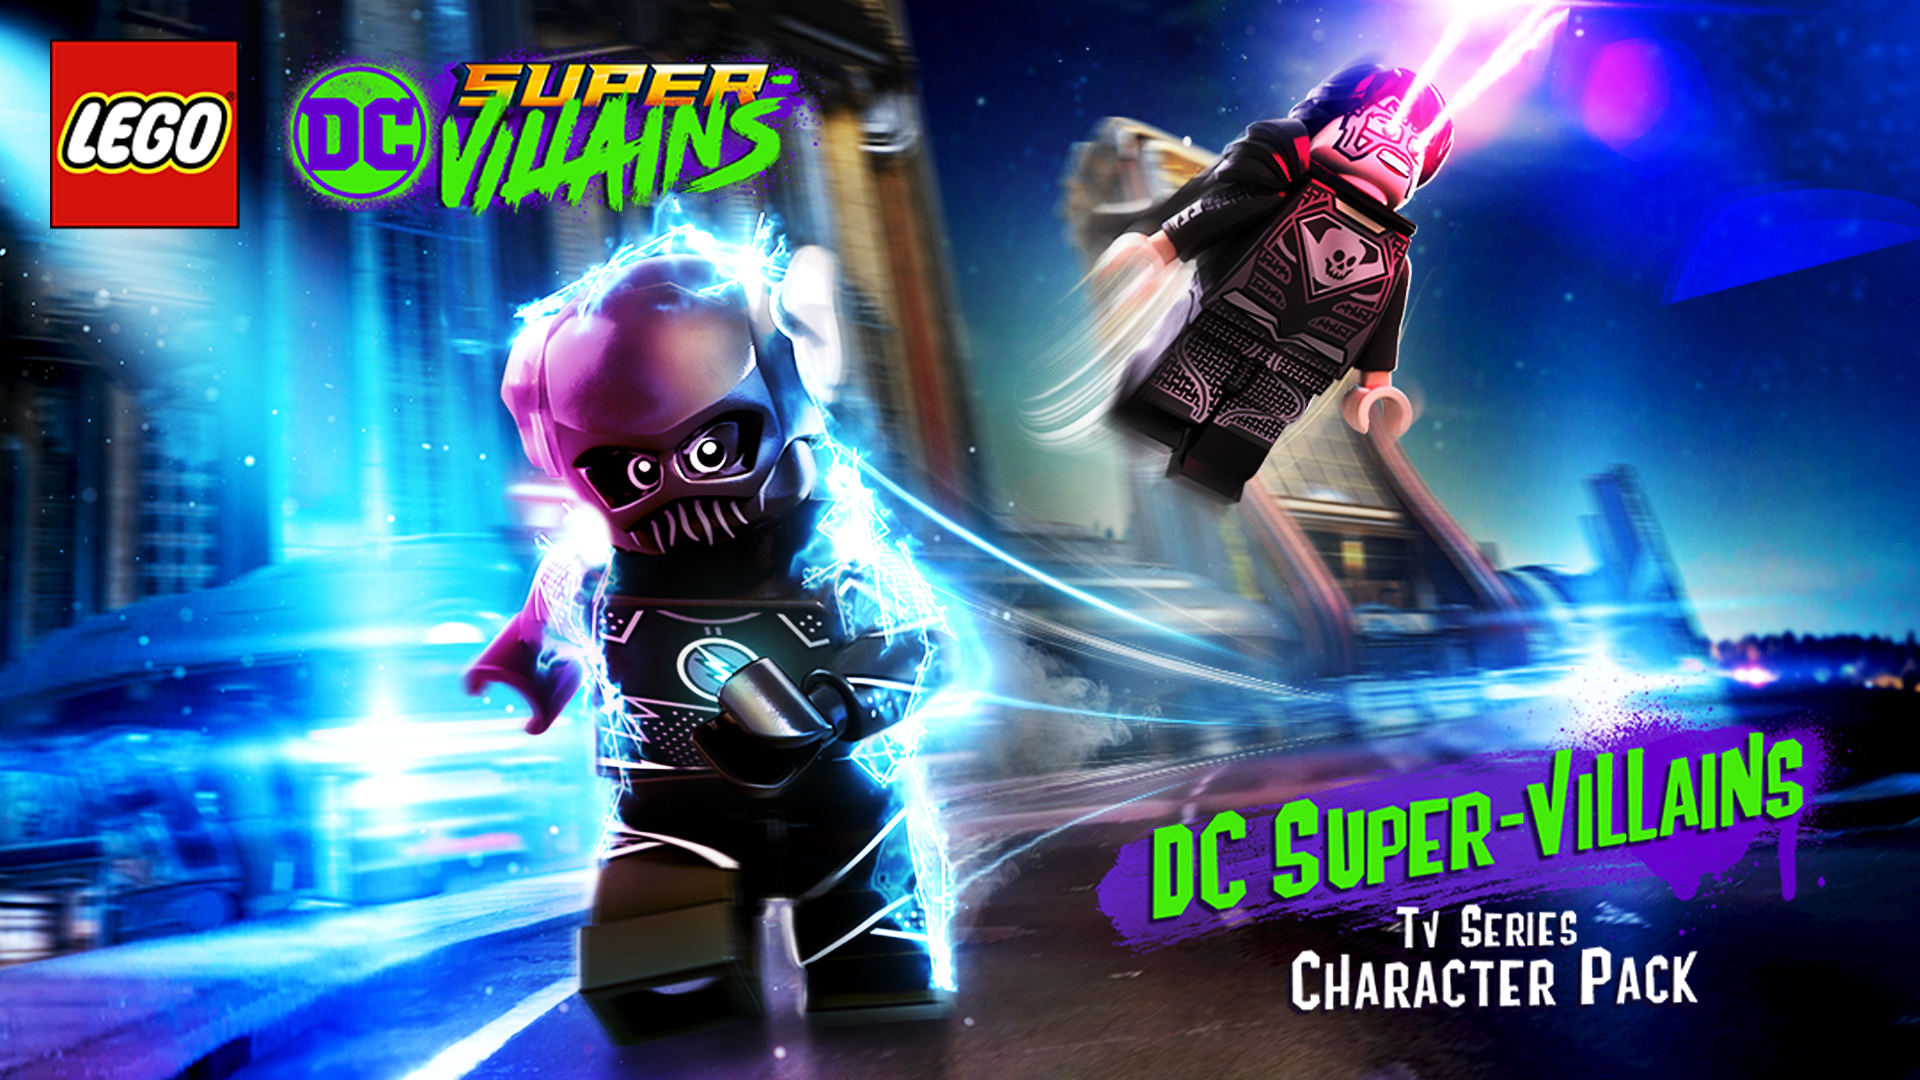 LEGO® DC TV Series Super-Villains Character Pack